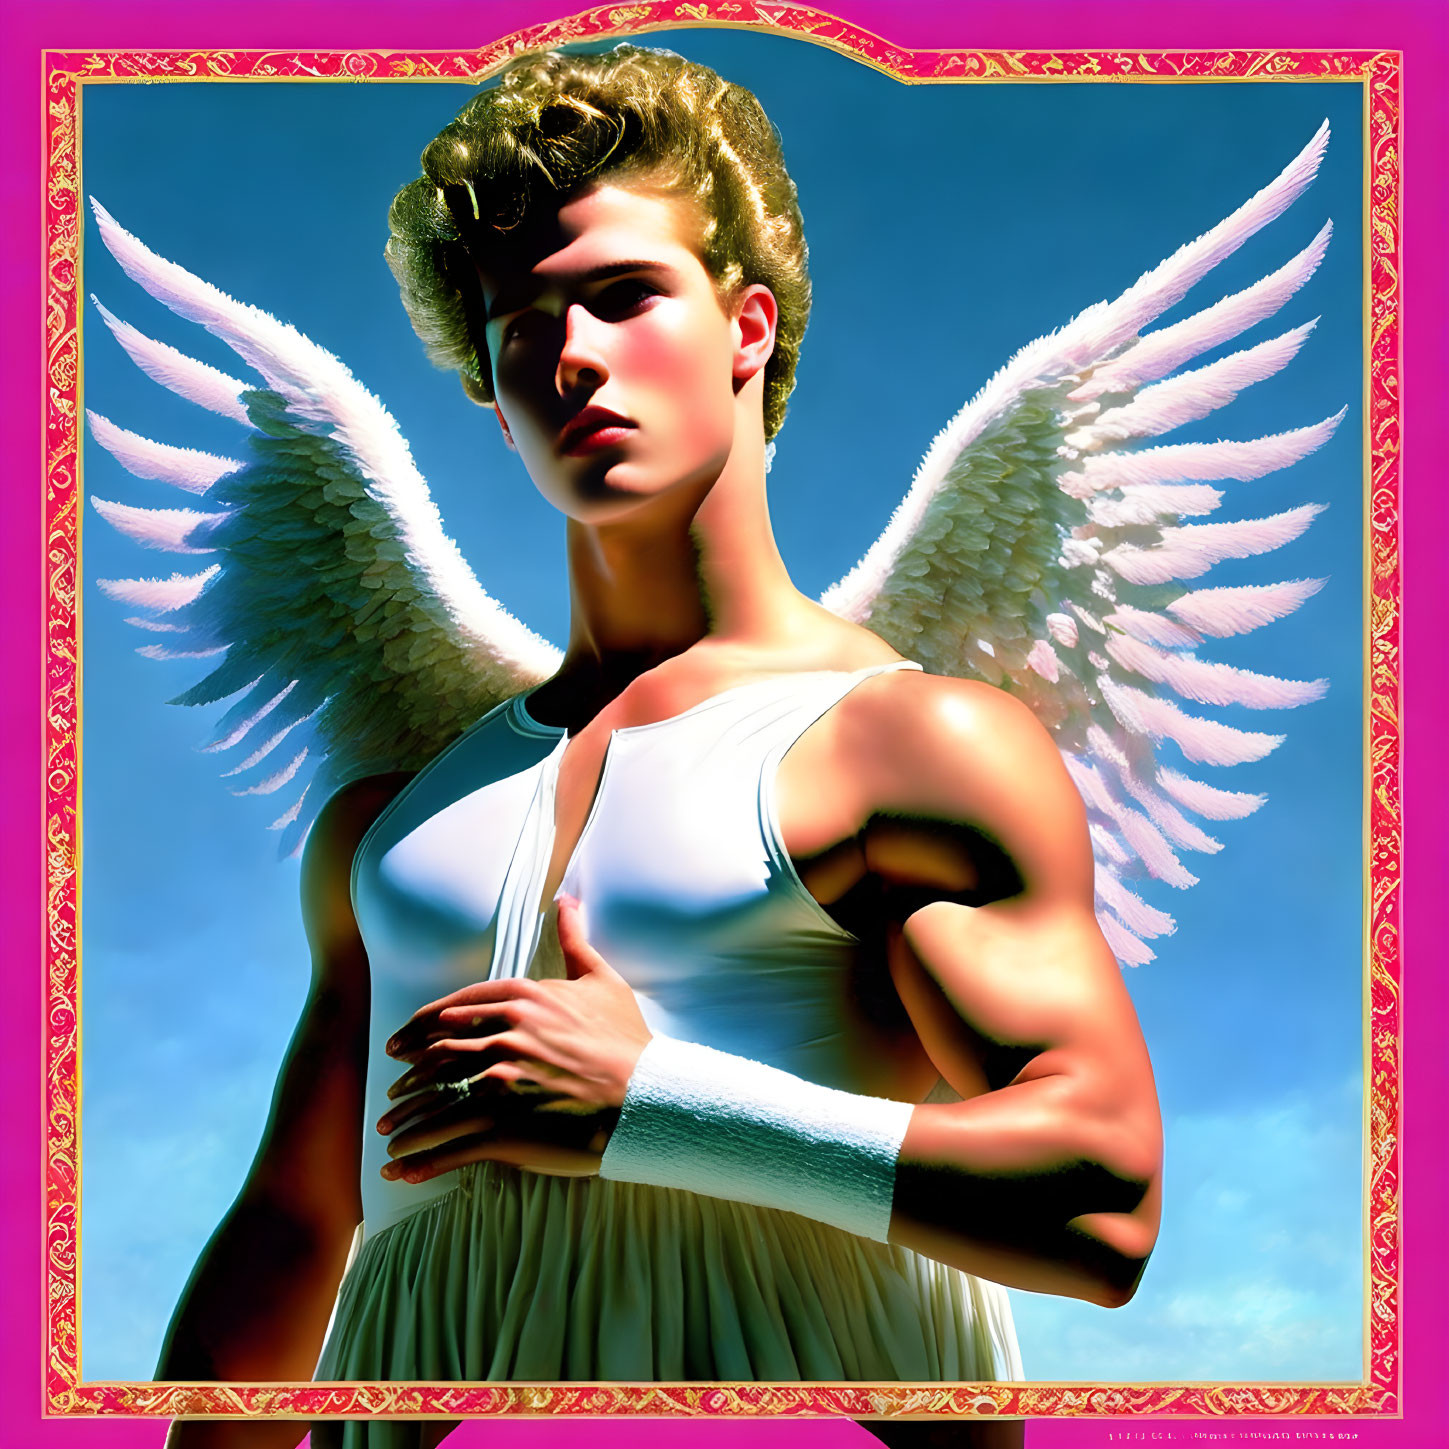 Male angel with white wings in digital art against blue sky